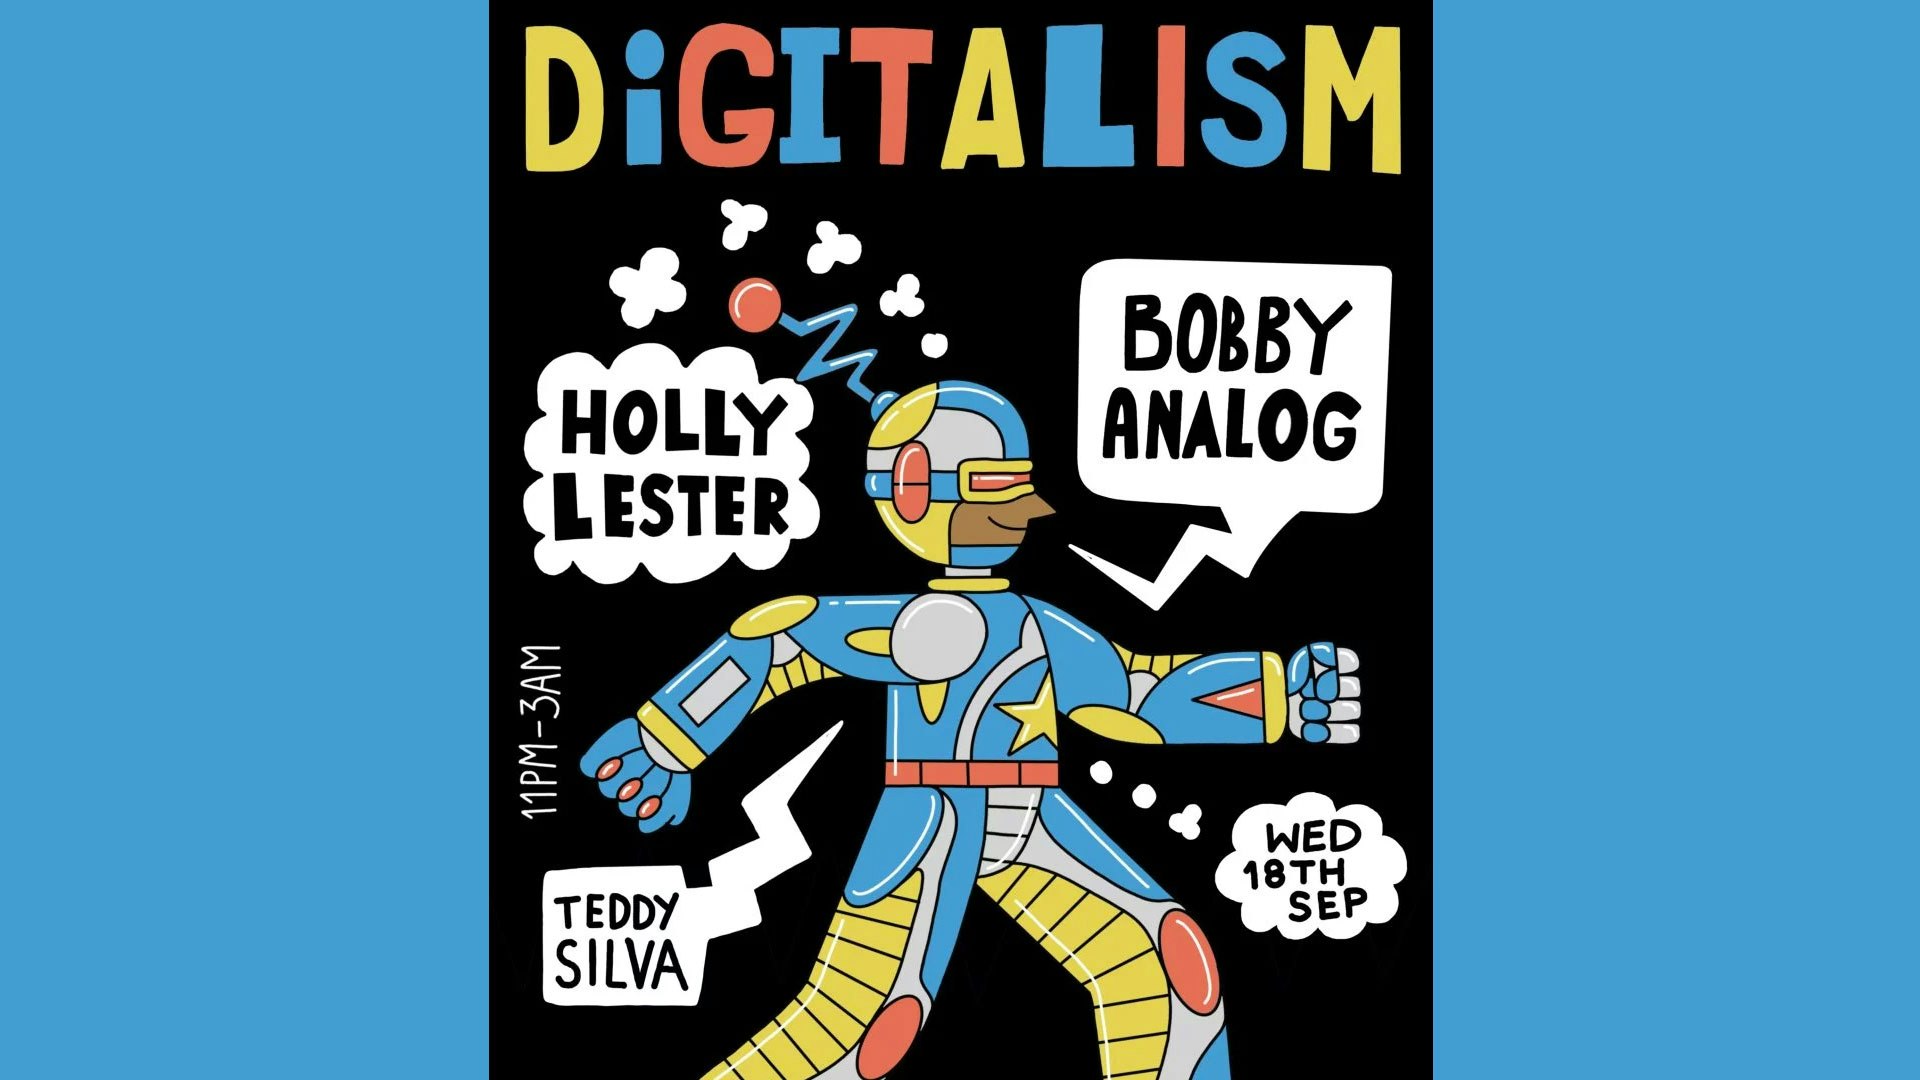 Digitalism Presents: Bobby Analog & Holly Lester